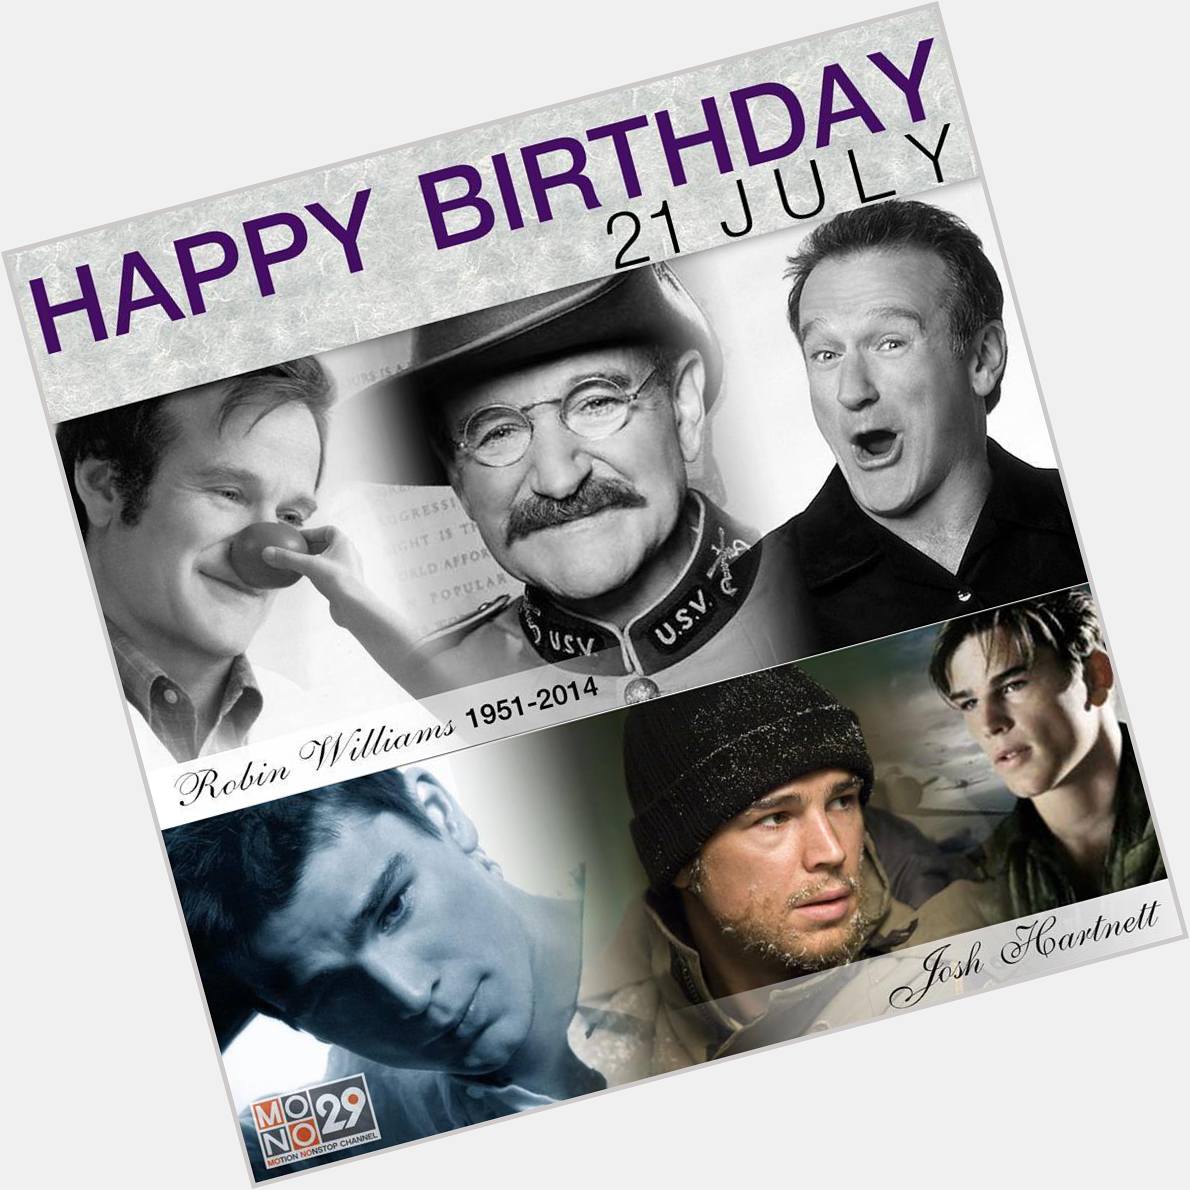 21 July Happy Birthday
- Robin Williams                       - Josh Hartnett                   Pearl Harbor 